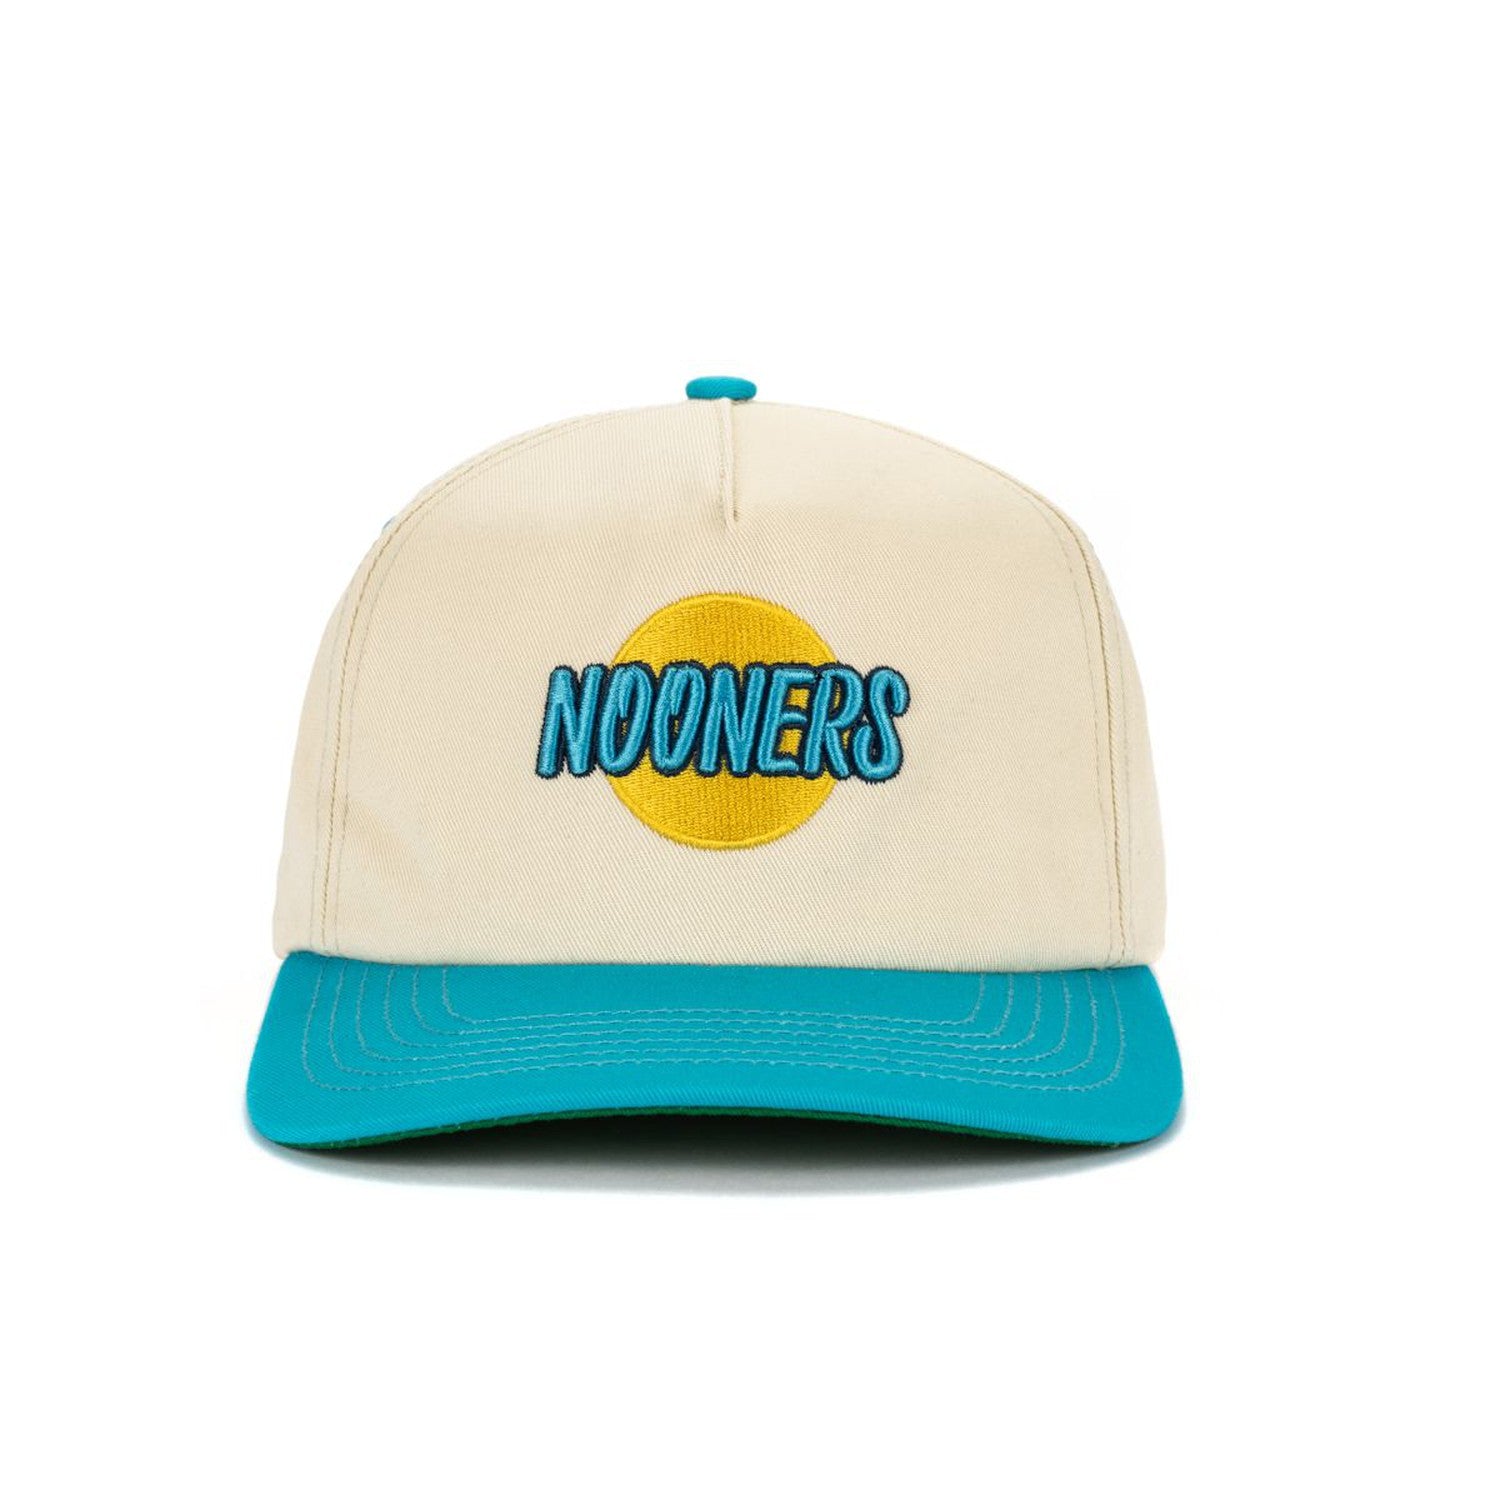 Giftig Ver weg Oceaan Nooners Retro Hat - Barstool Sports Hats, Clothing & Merch